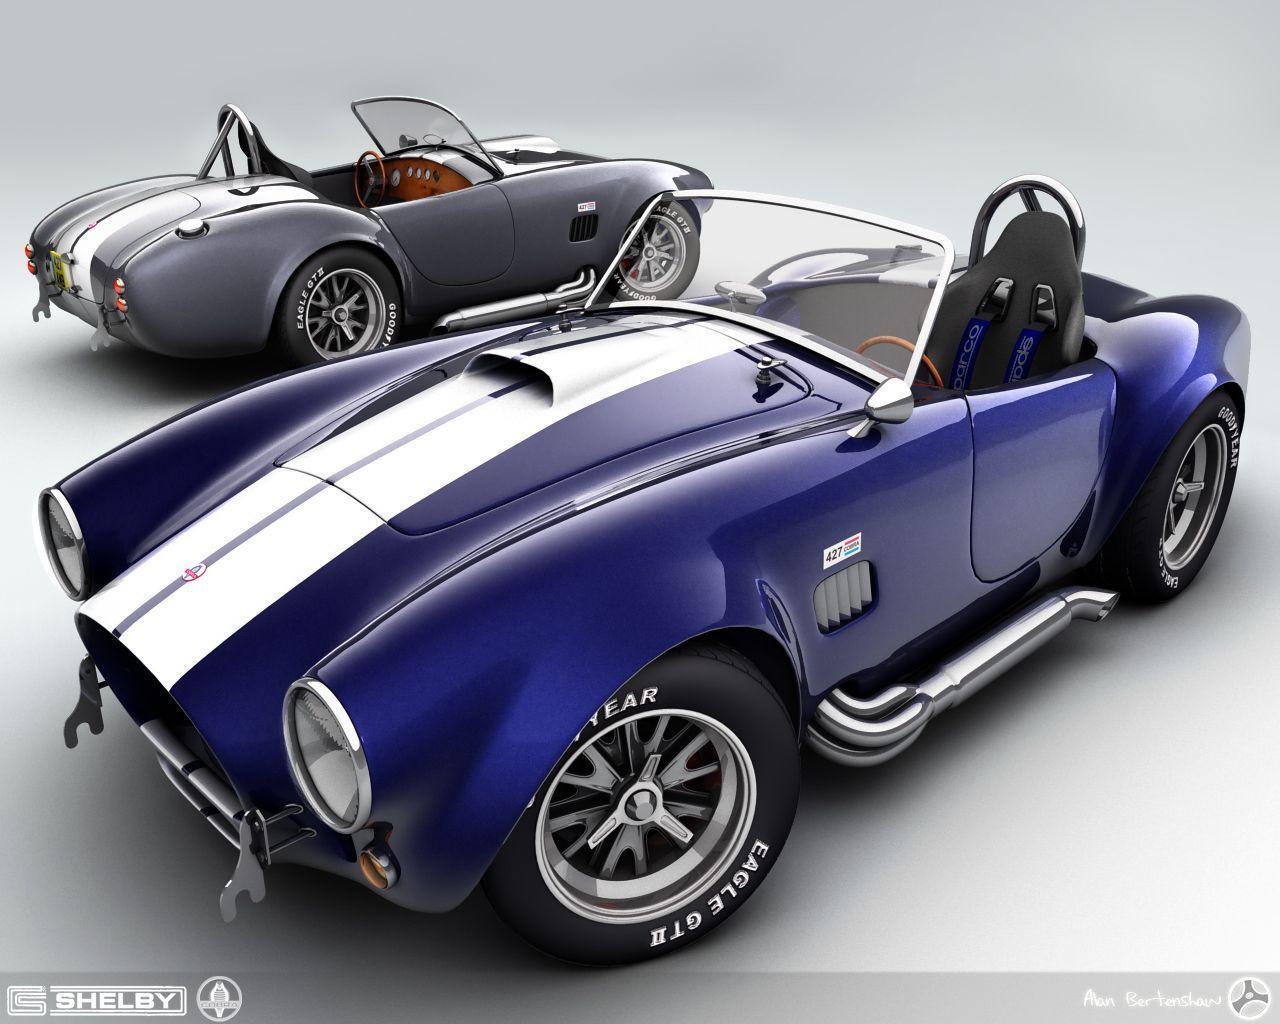 Shelby Cobra Wallpaper6. HD Wallpaper. Desktop Background 1080p